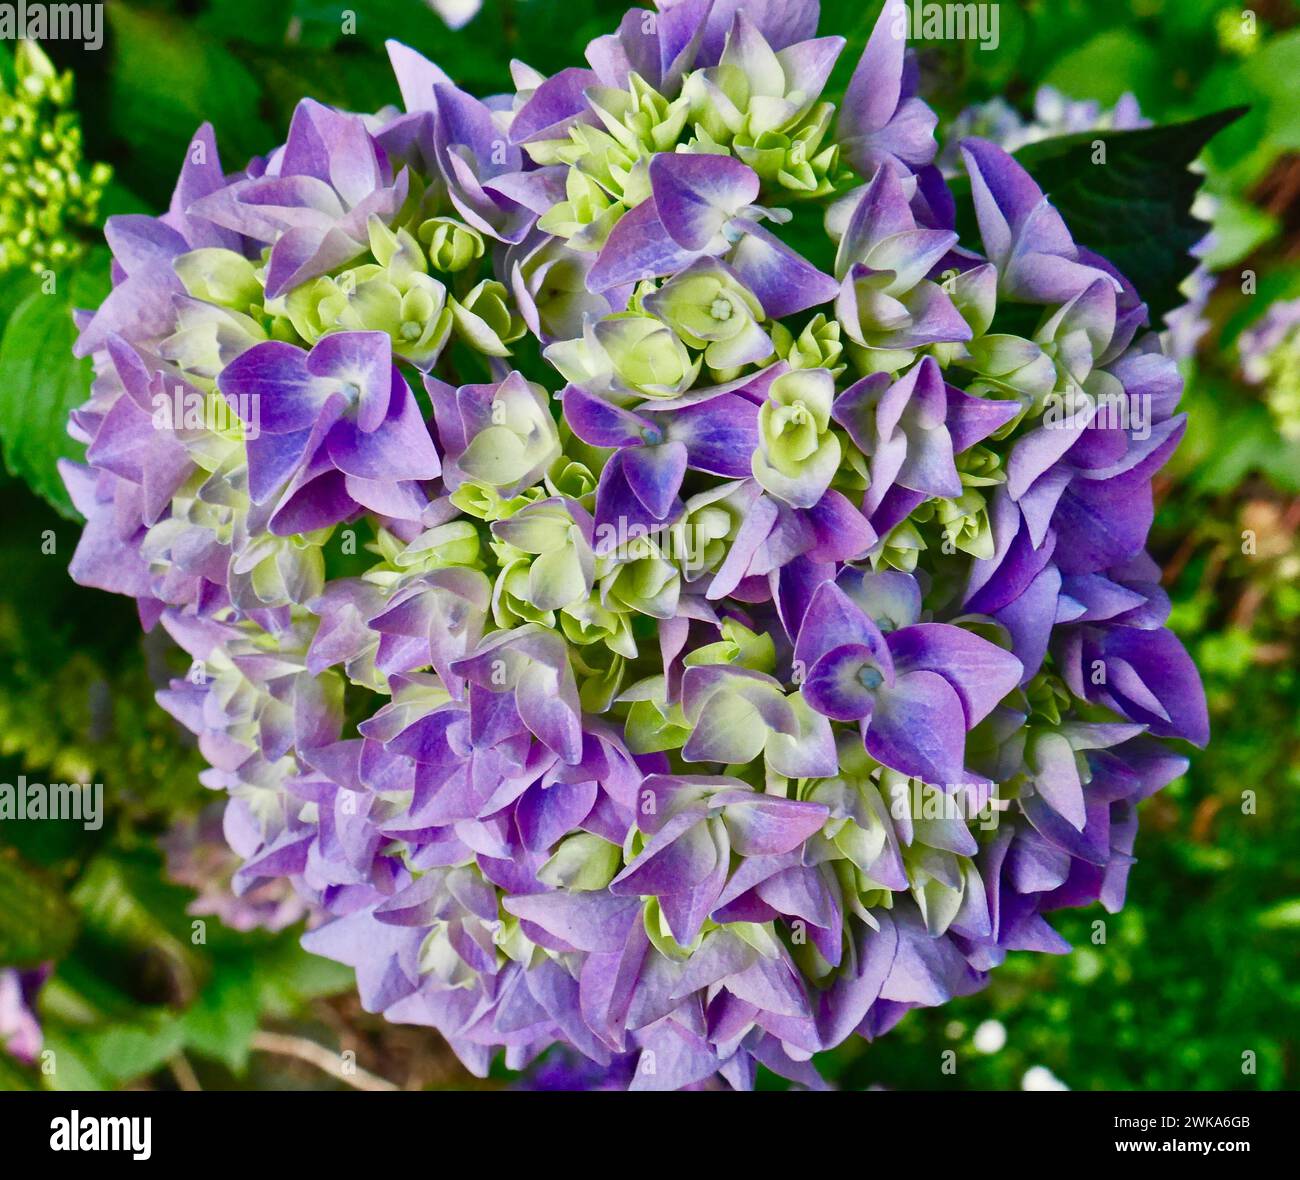 Flower from the garden. Stock Photo